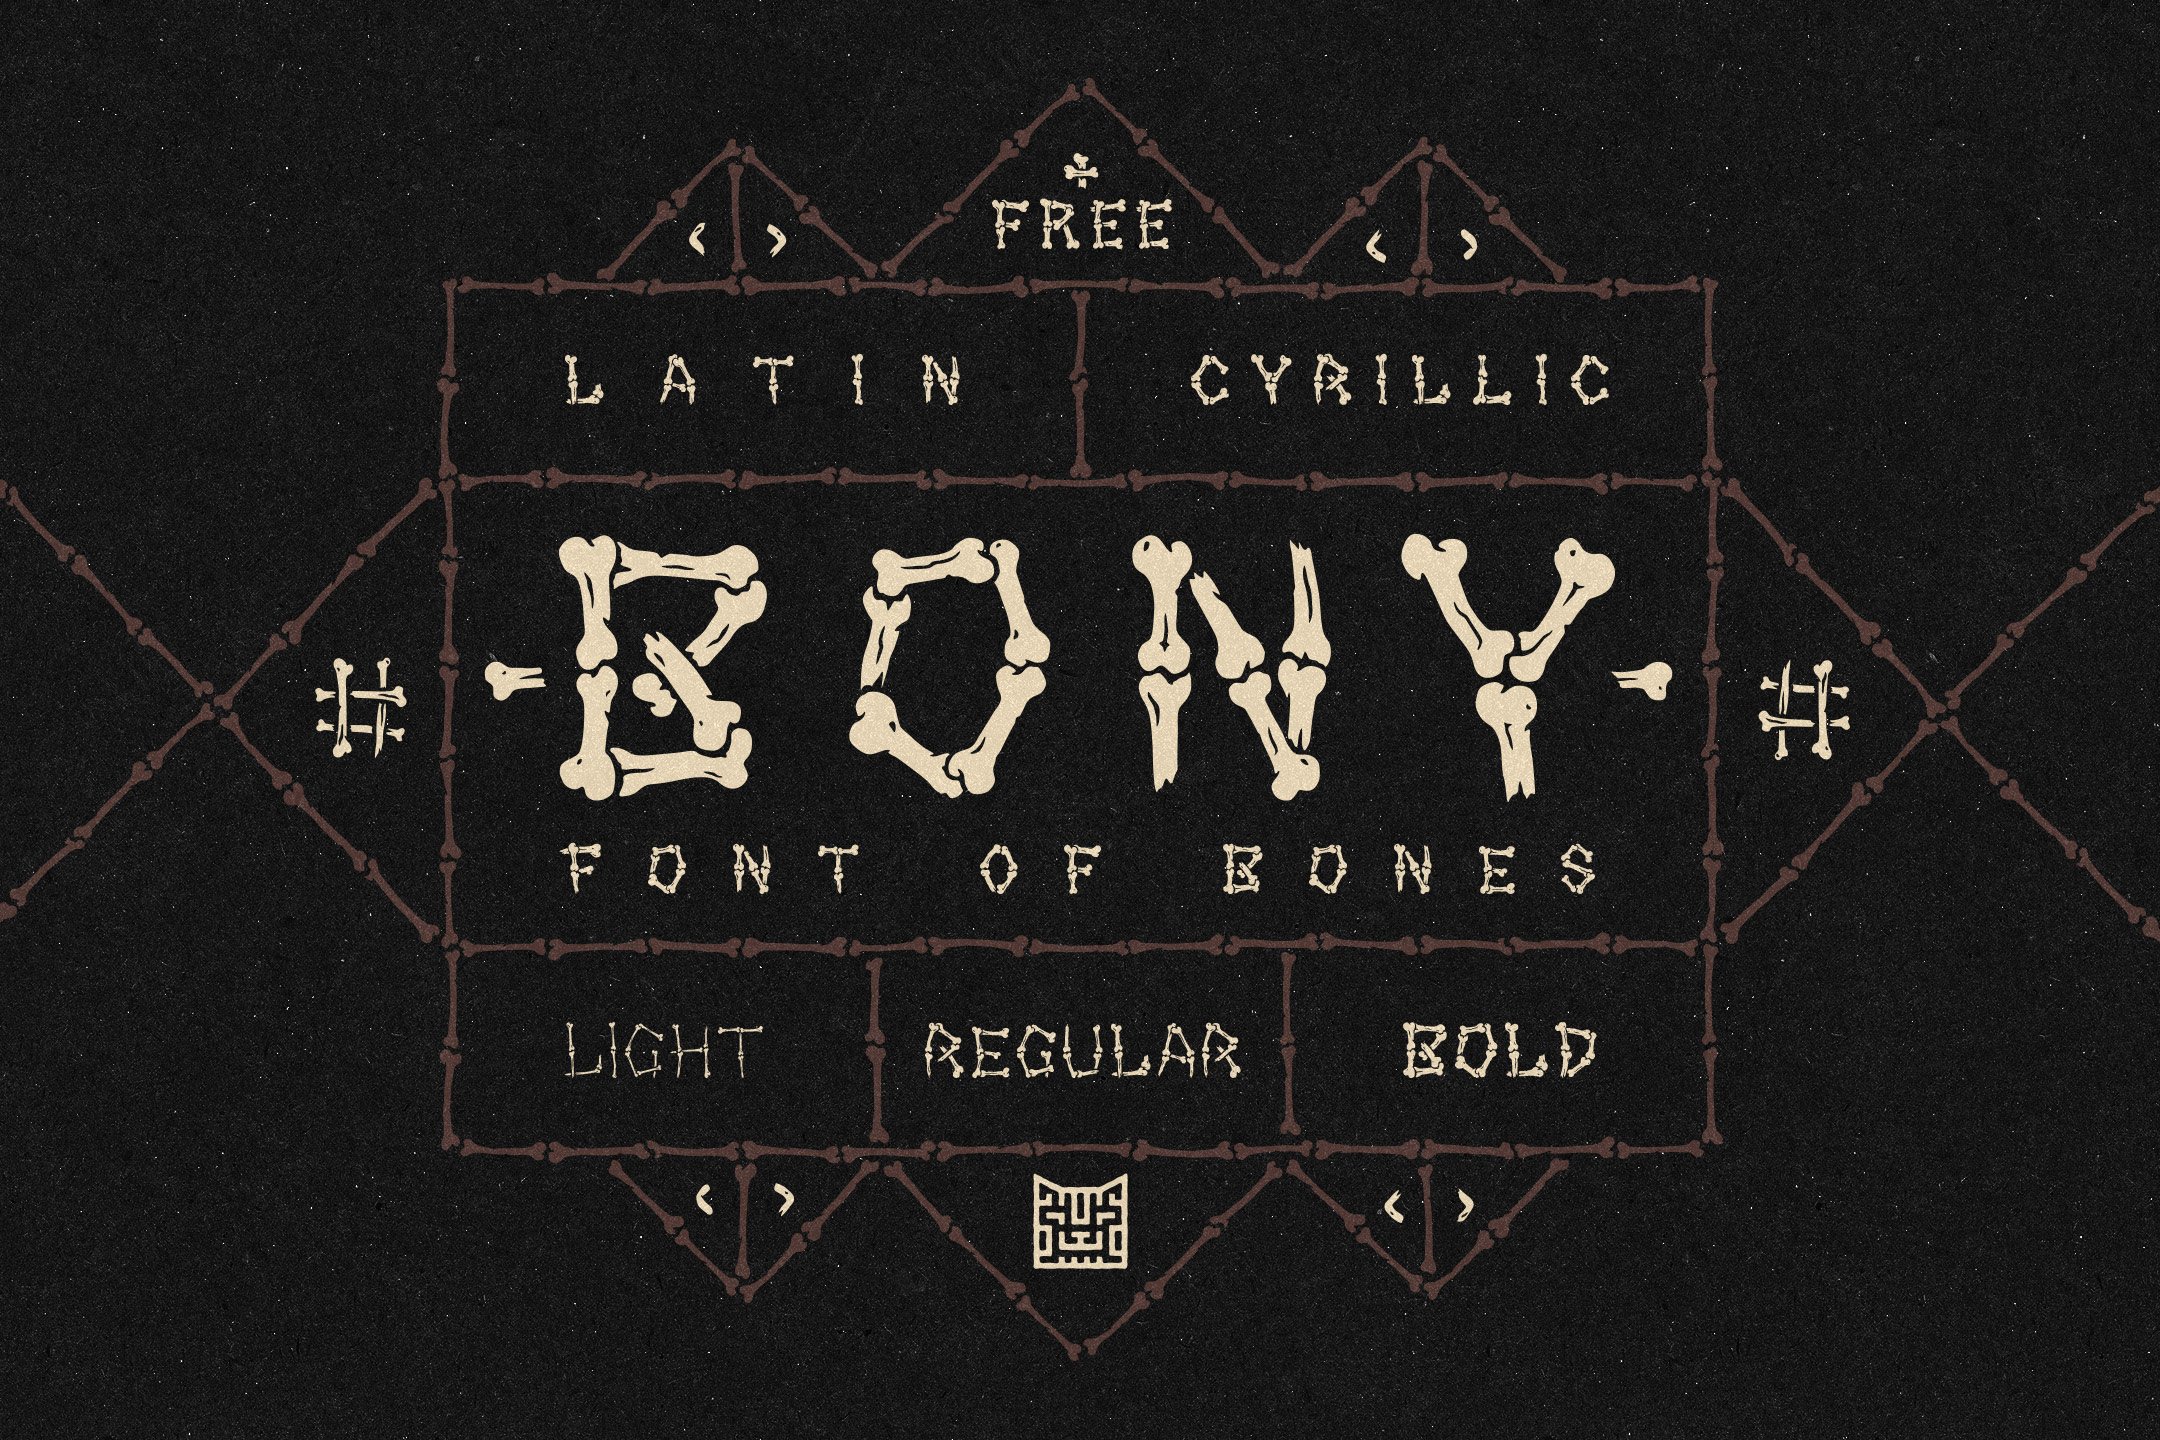 BONY | Font Of Bones cover image.